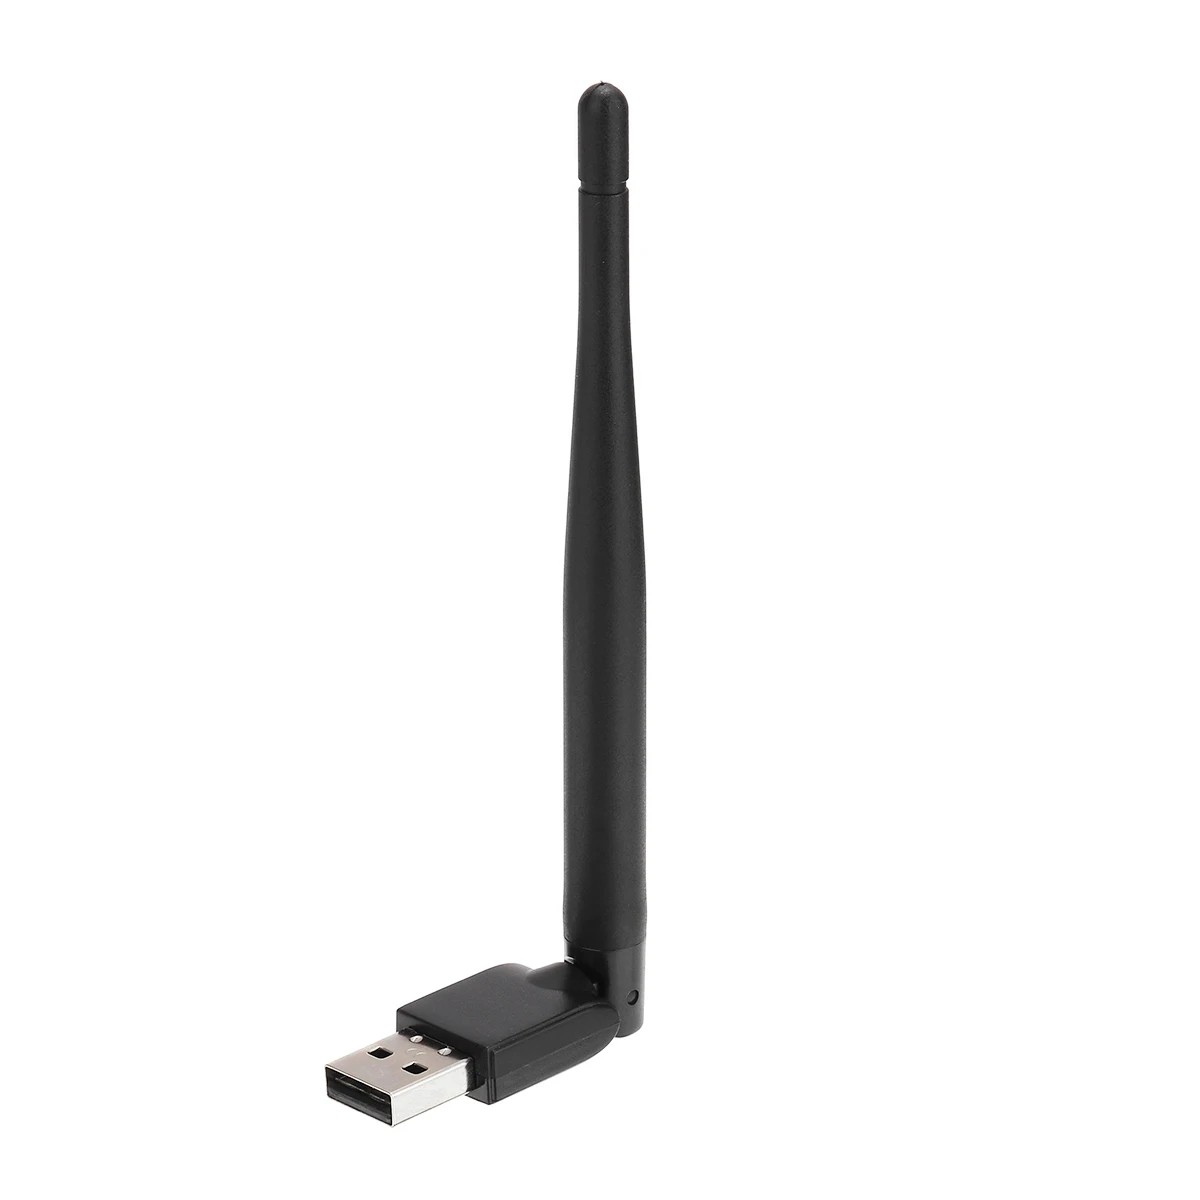 Mayitr DVB-S2 Wi-Fi телевизионная приставка HD FTA цифровой спутниковый ТВ приемник 1080P Full HD 3g USB поддержка сетевого обмена